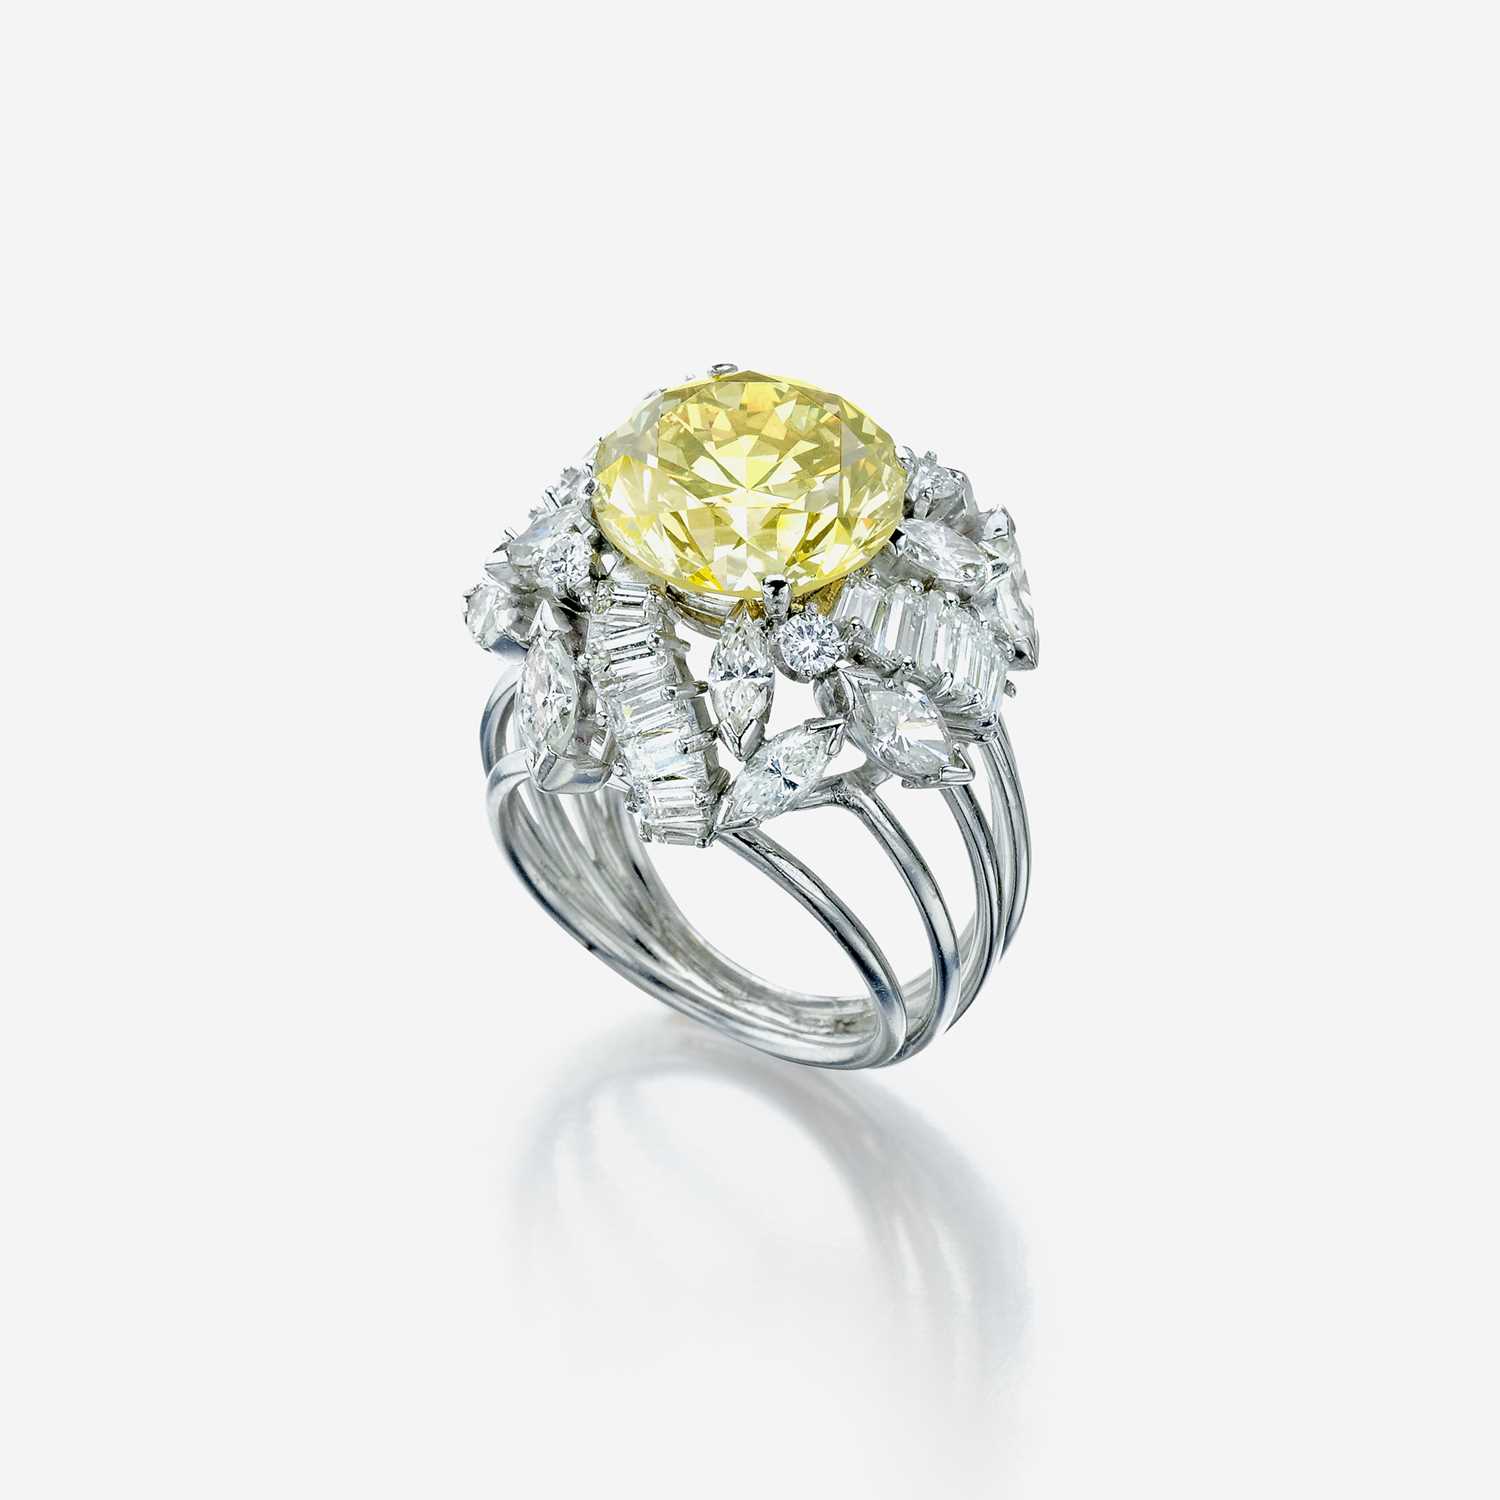 Lot 147 - A colored diamond, diamond, and eighteen karat white gold ring